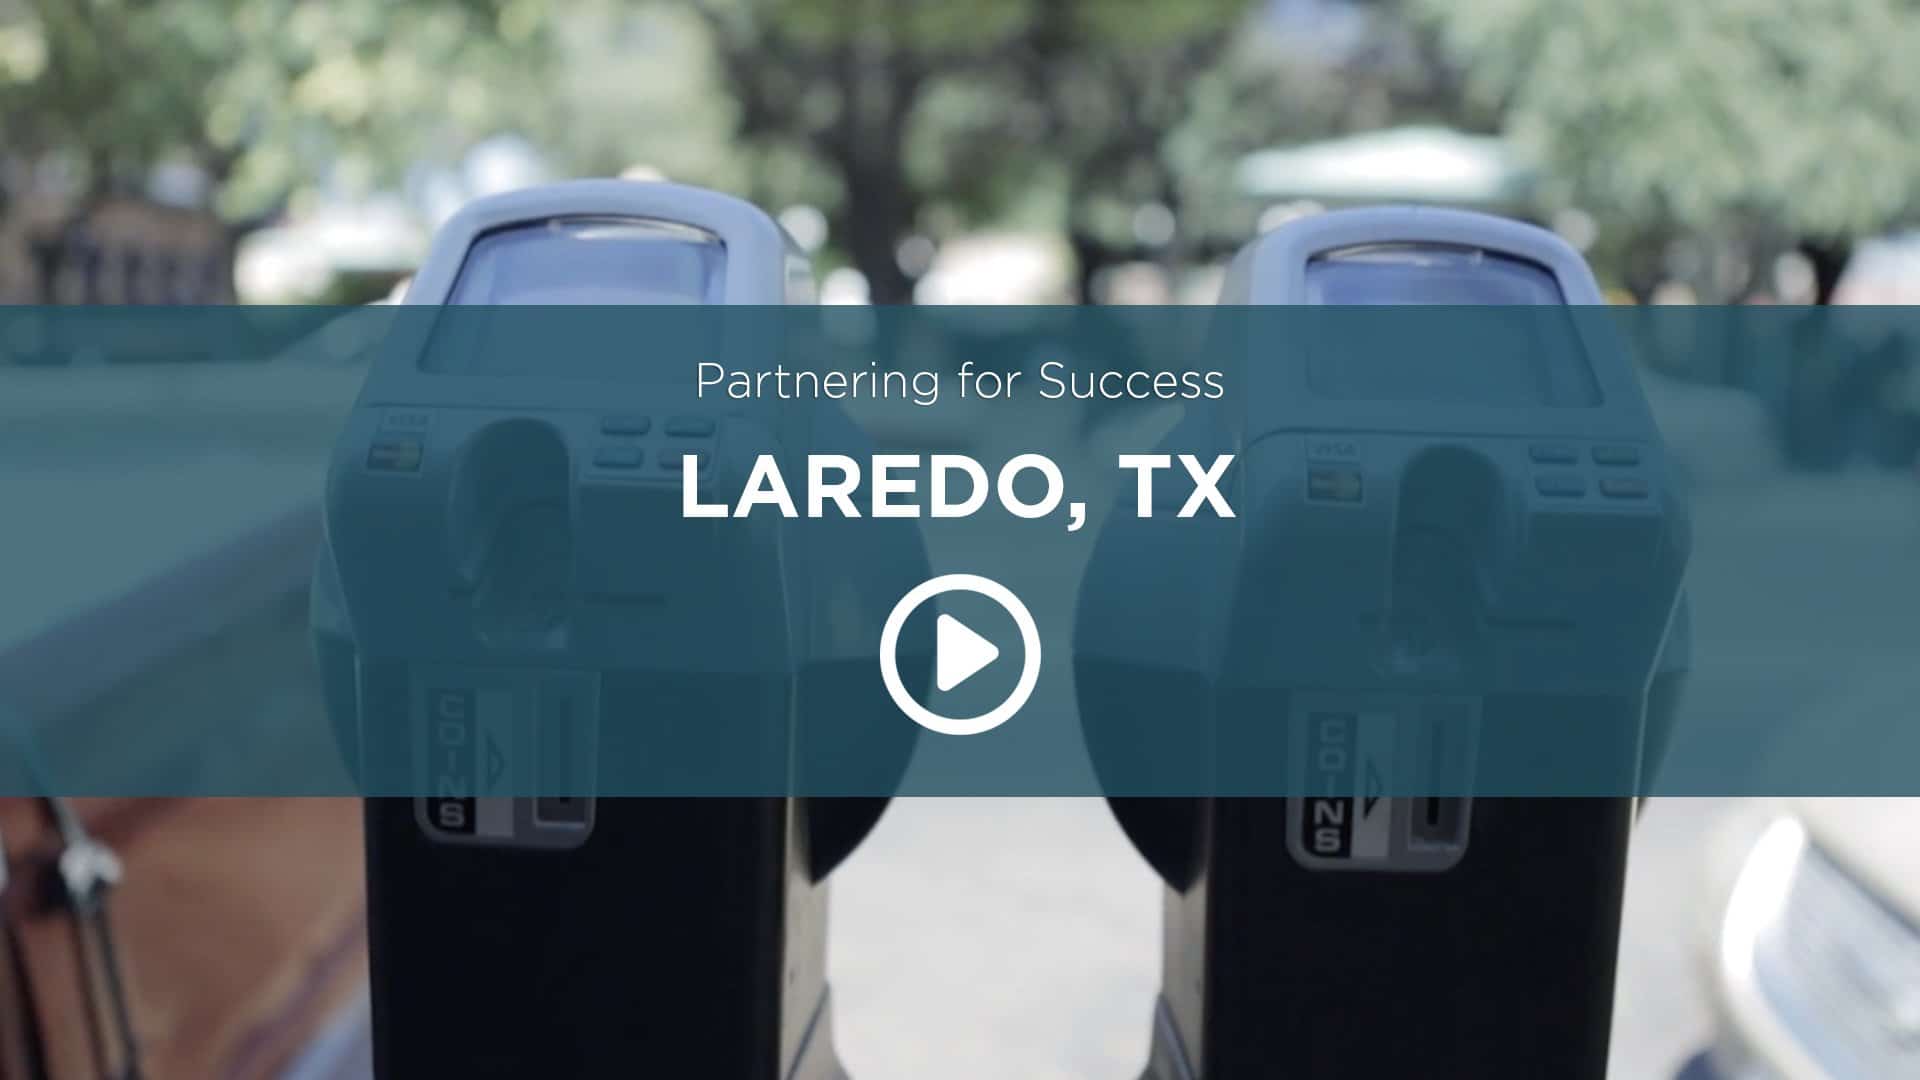 Laredo TX Case Study Video